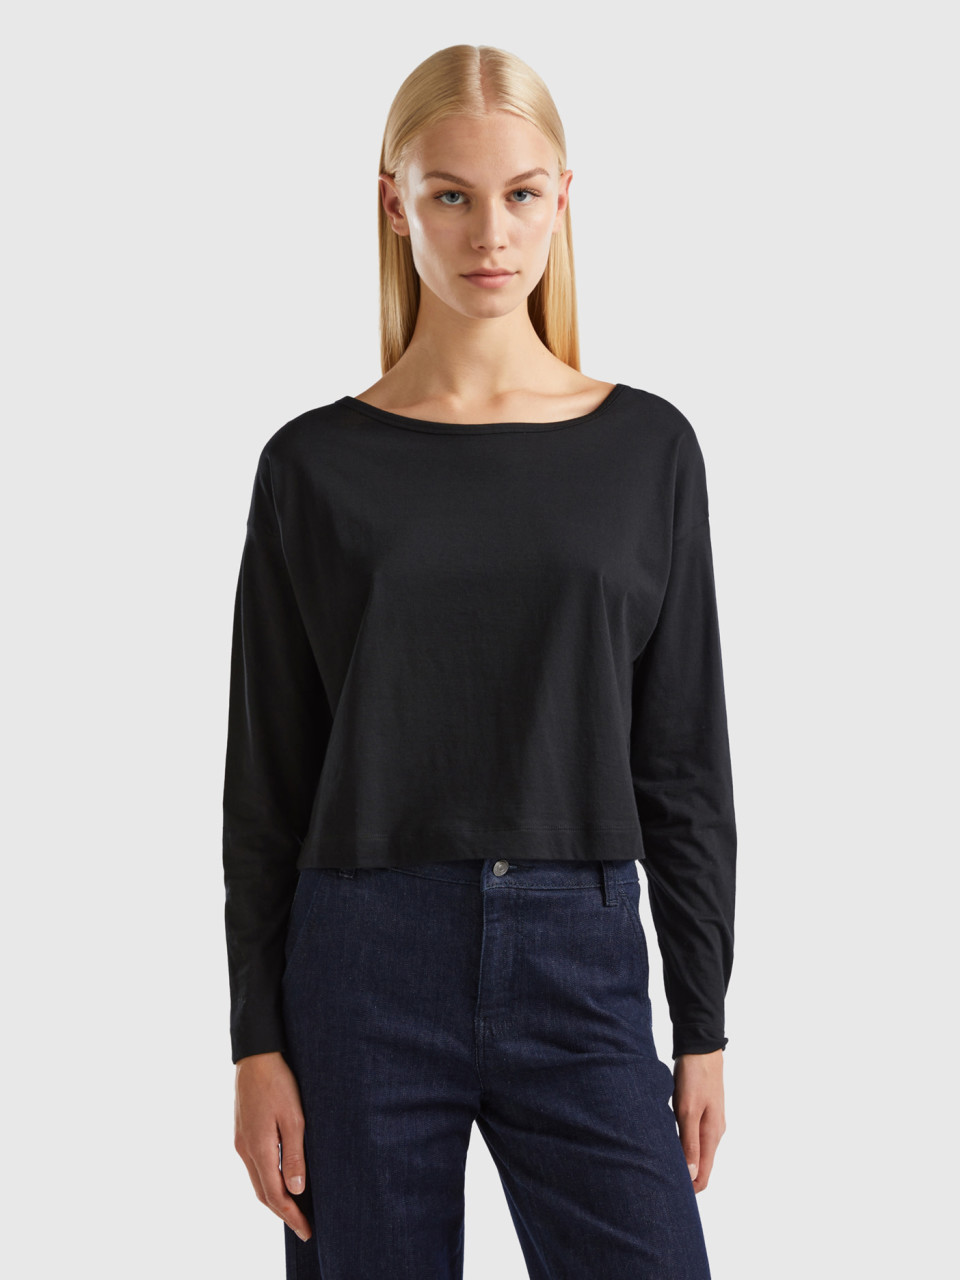 Benetton, Black Long Fiber Cotton T-shirt, Black, Women